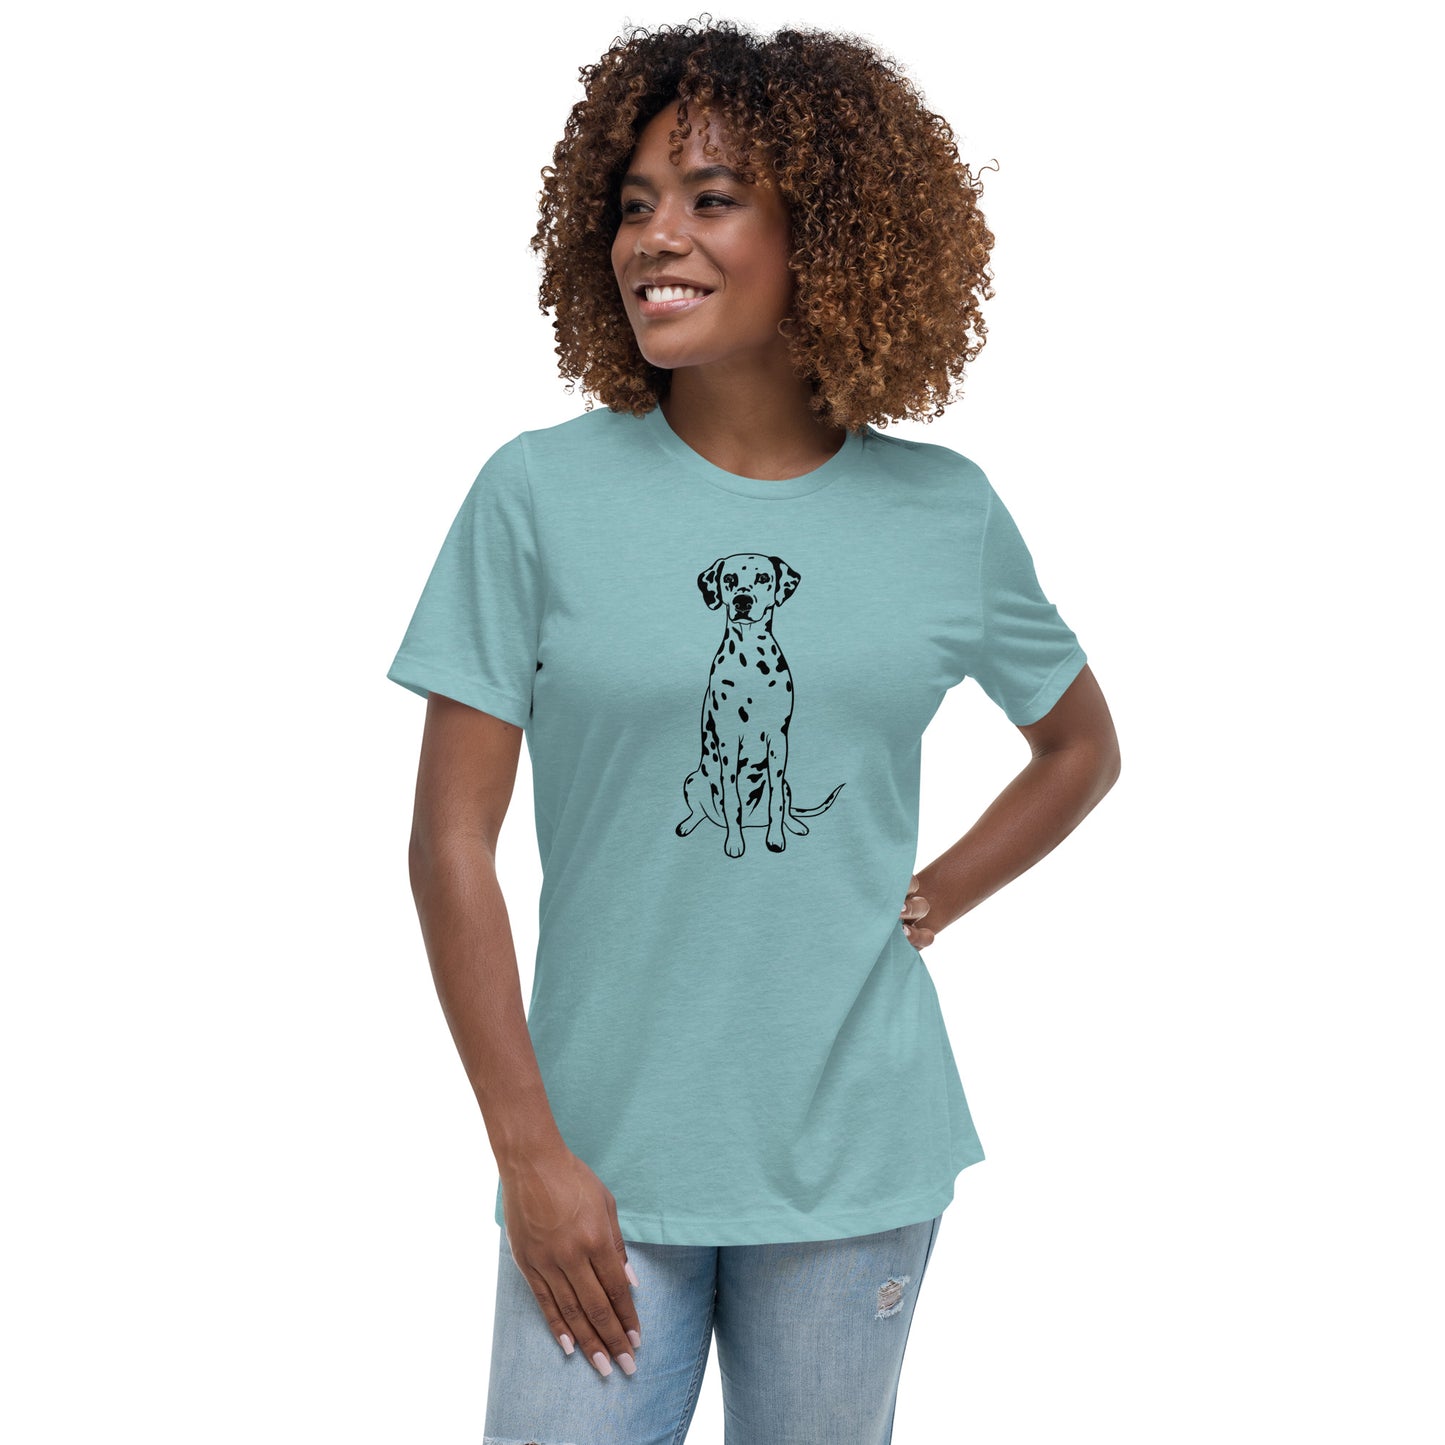 Dalmatian Women's Relaxed T-Shirt